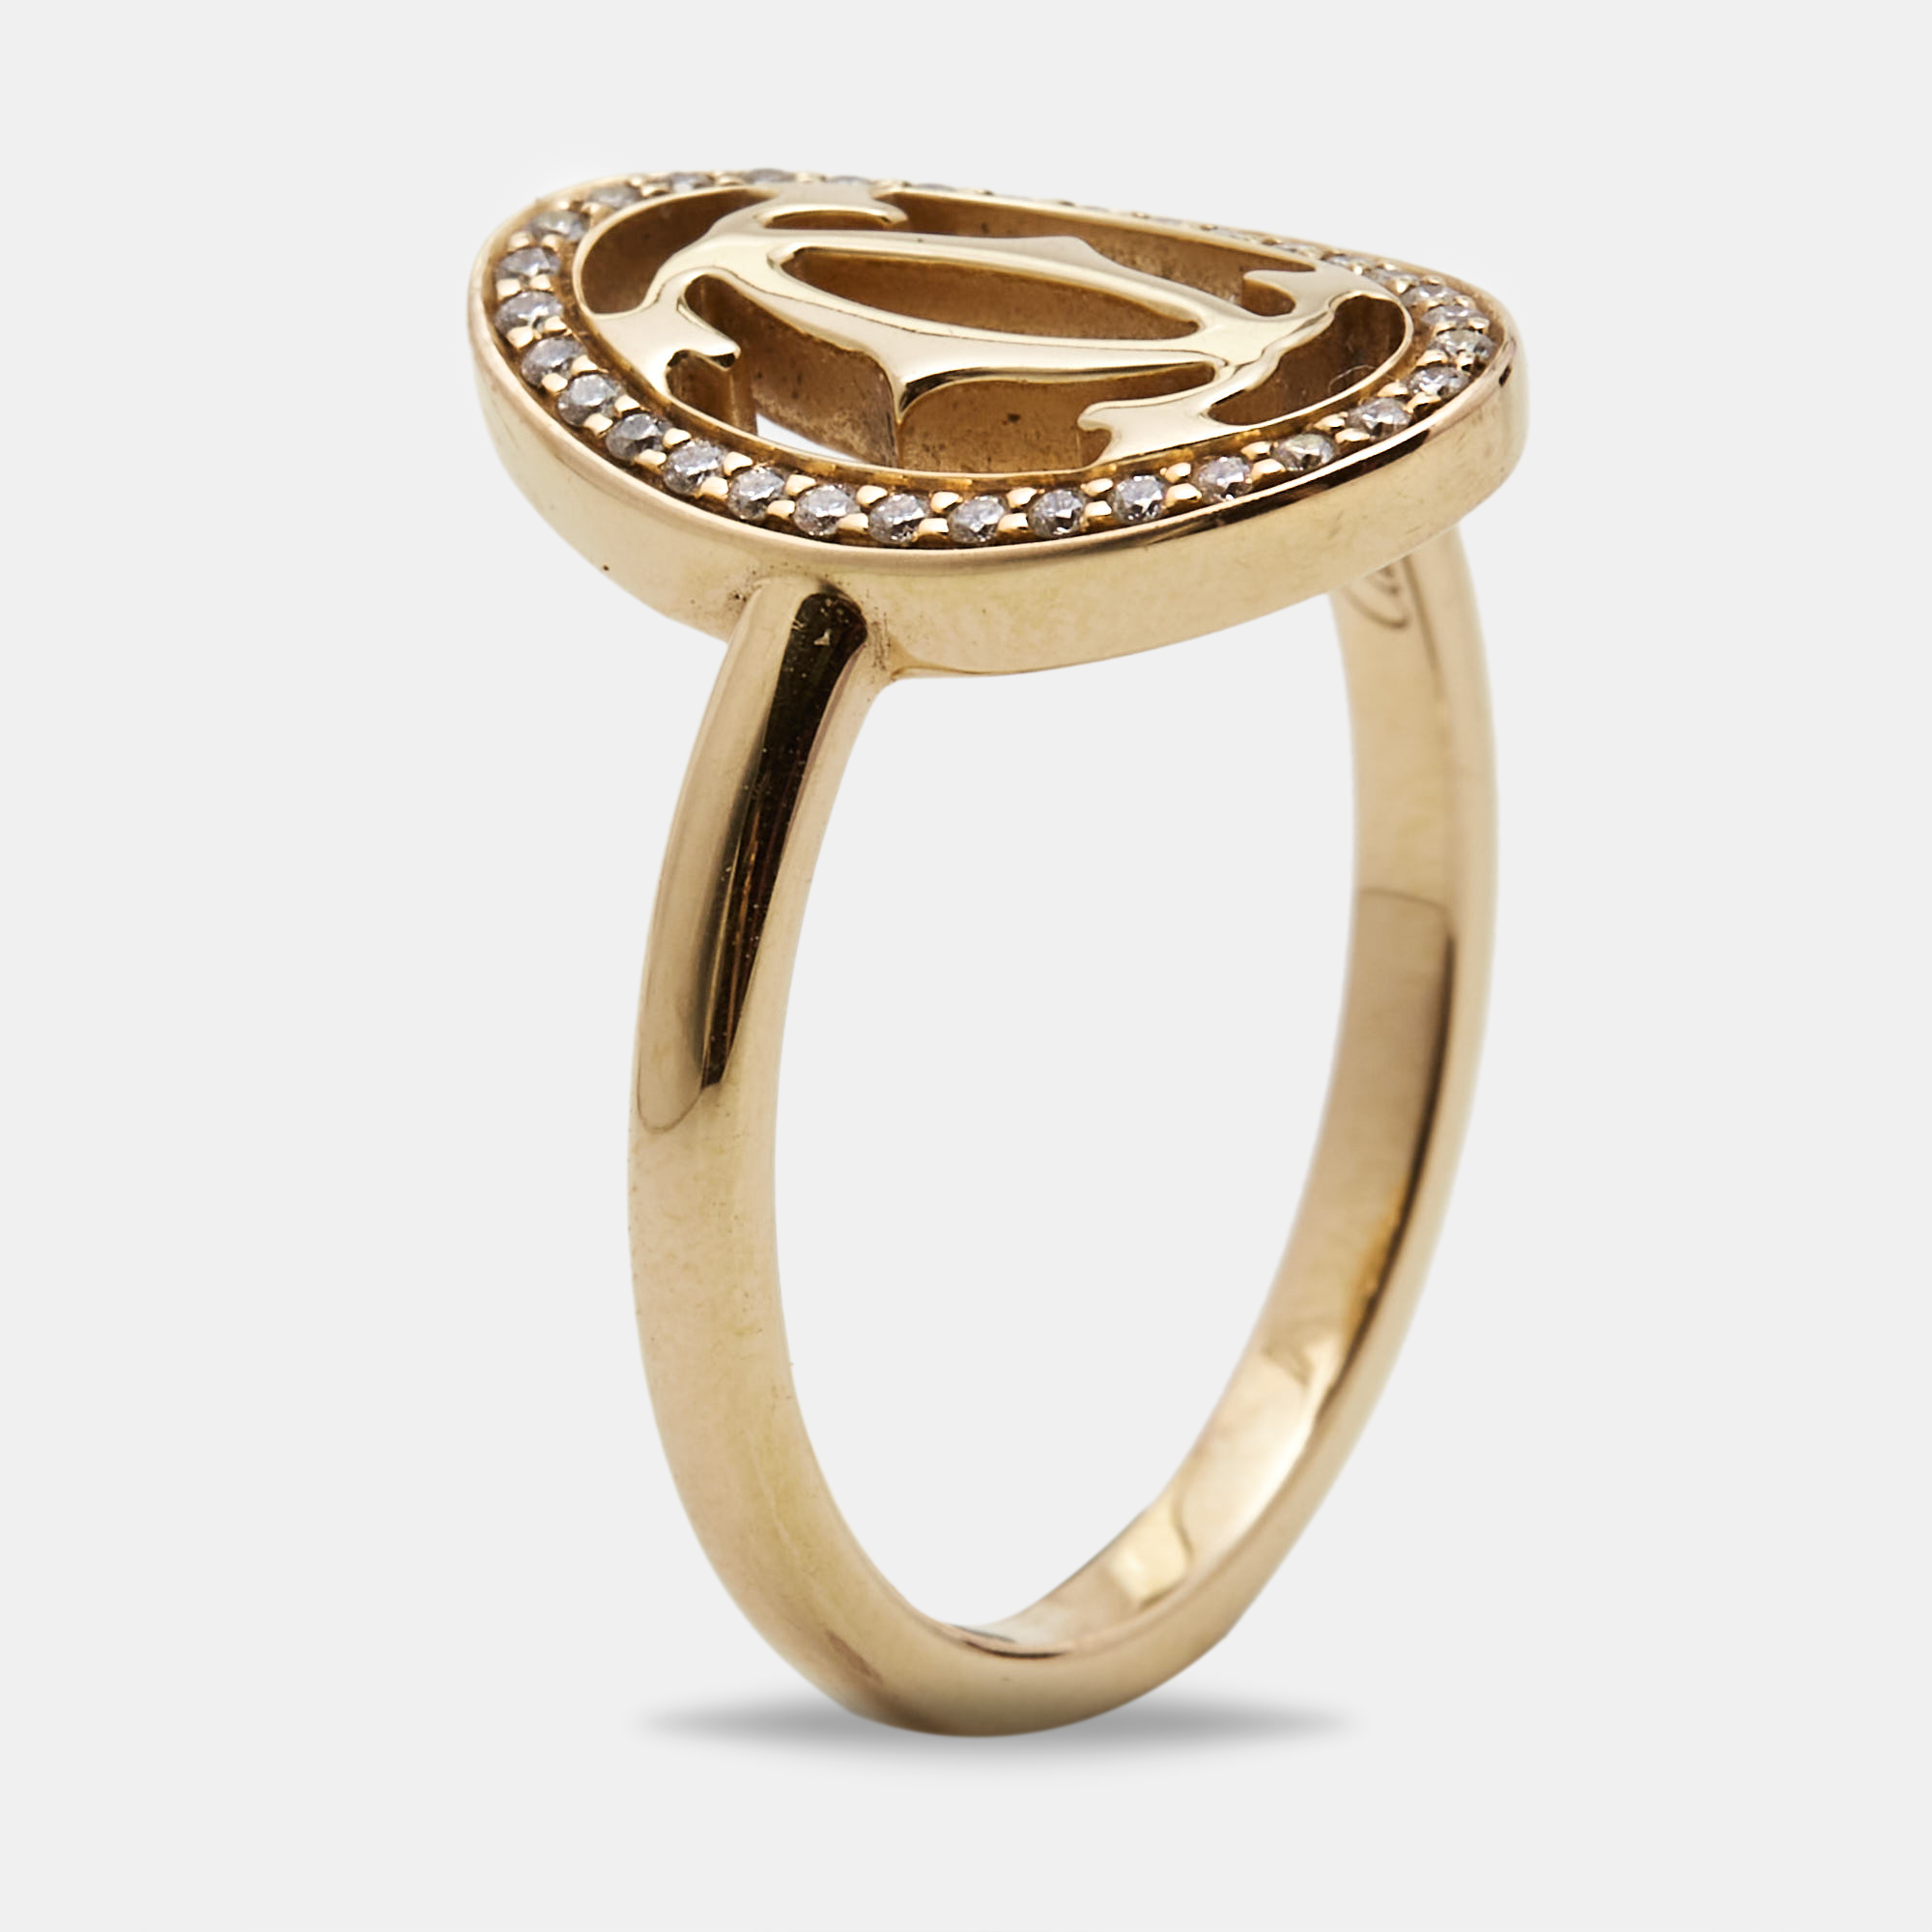 Cartier c de cartier diamonds 18k rose gold ring size 54